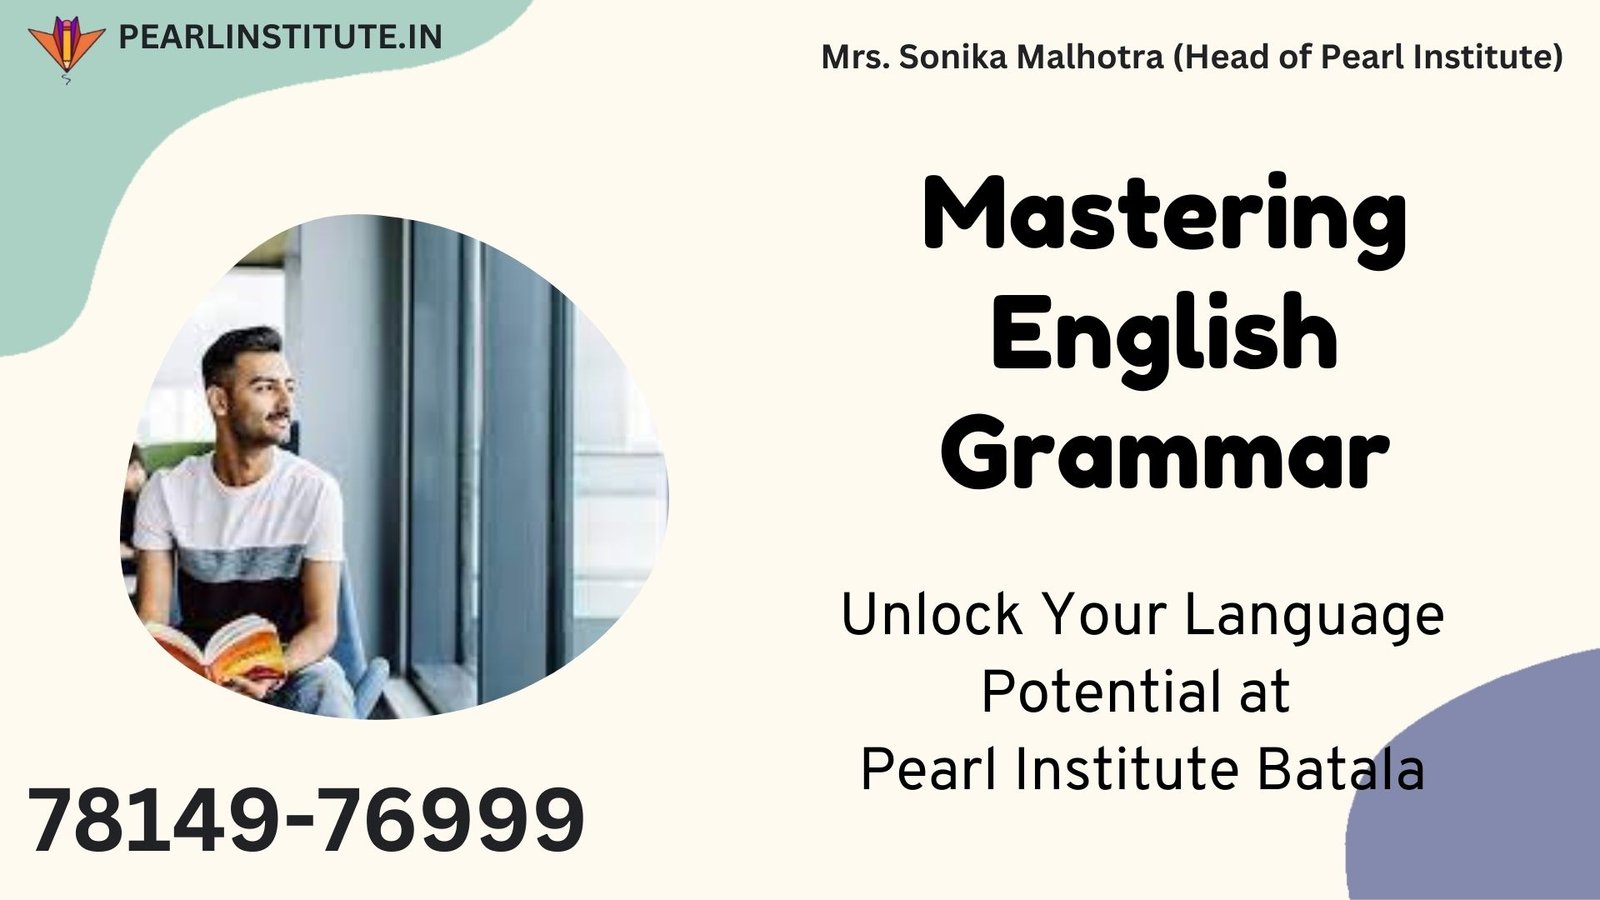 Mastering English Grammar: Unlock Your Language Potential at Pearl Institute Batala